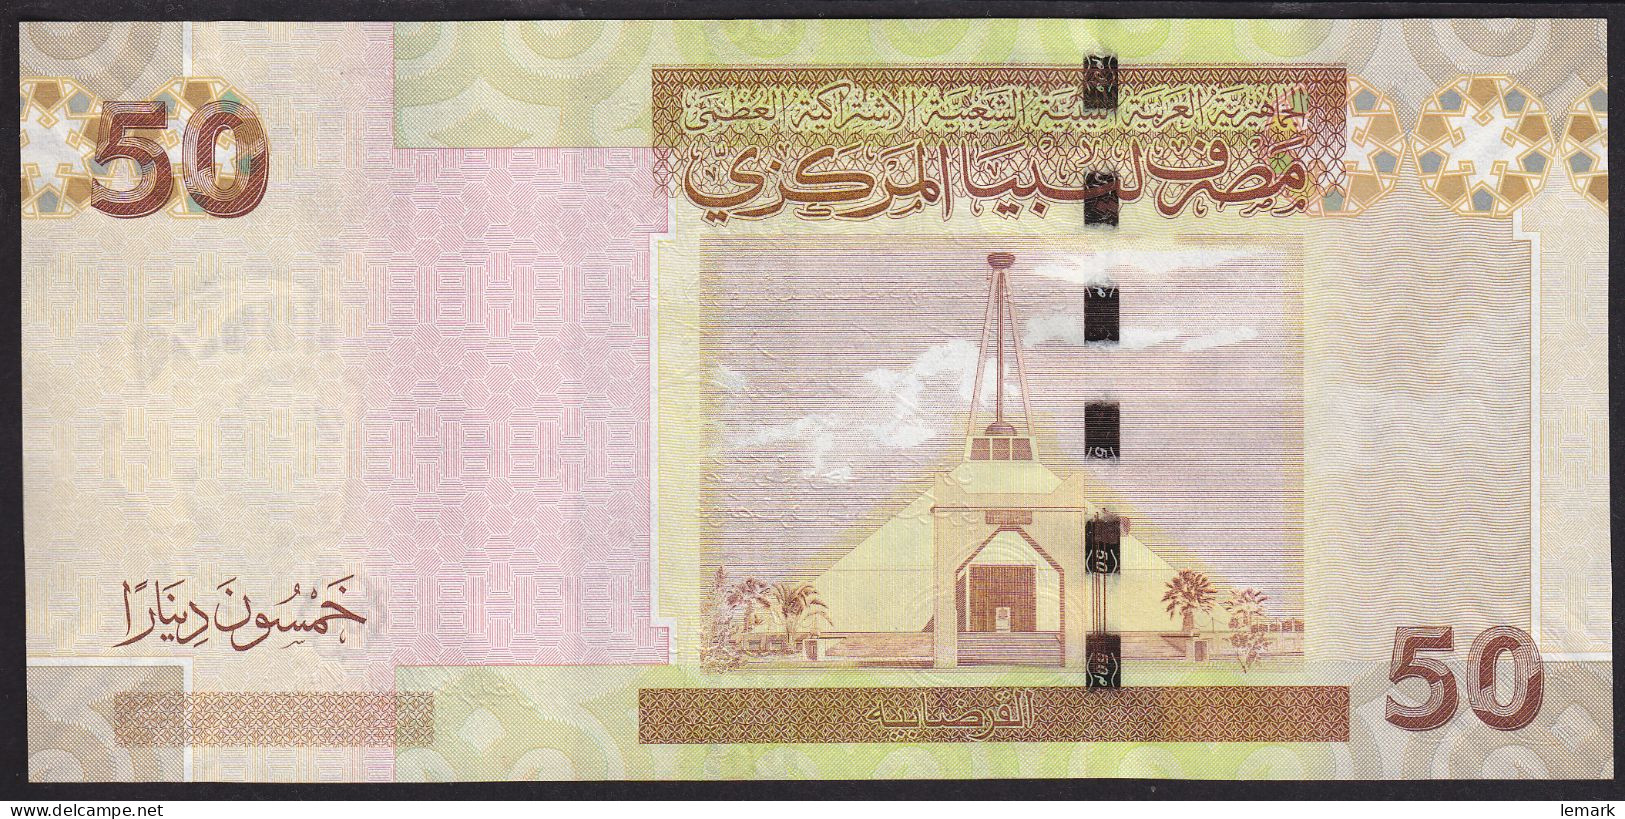 Libya 50 Dinara 2009 P75 UNC - Libya